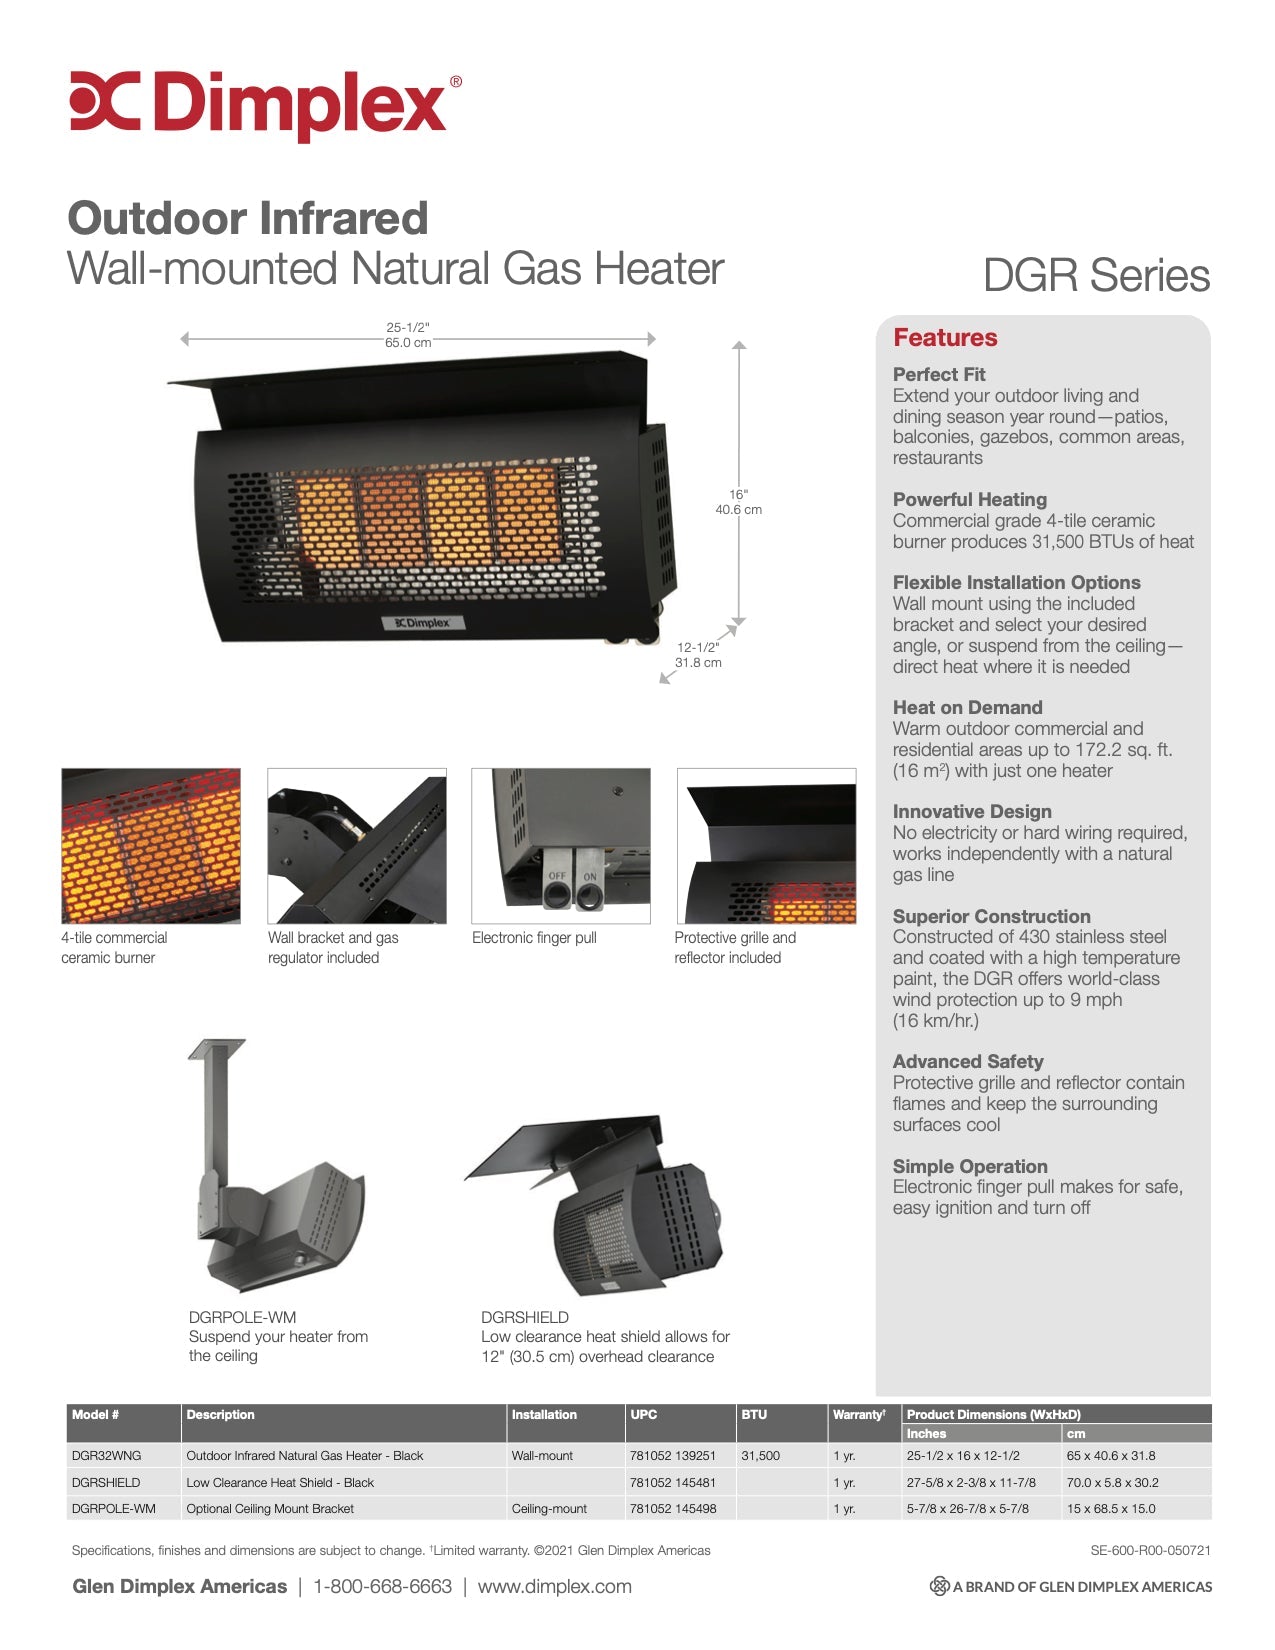 Dimplex Outdoor Infared Portable Heater Head DGR32PLP Gas Wall Mounted